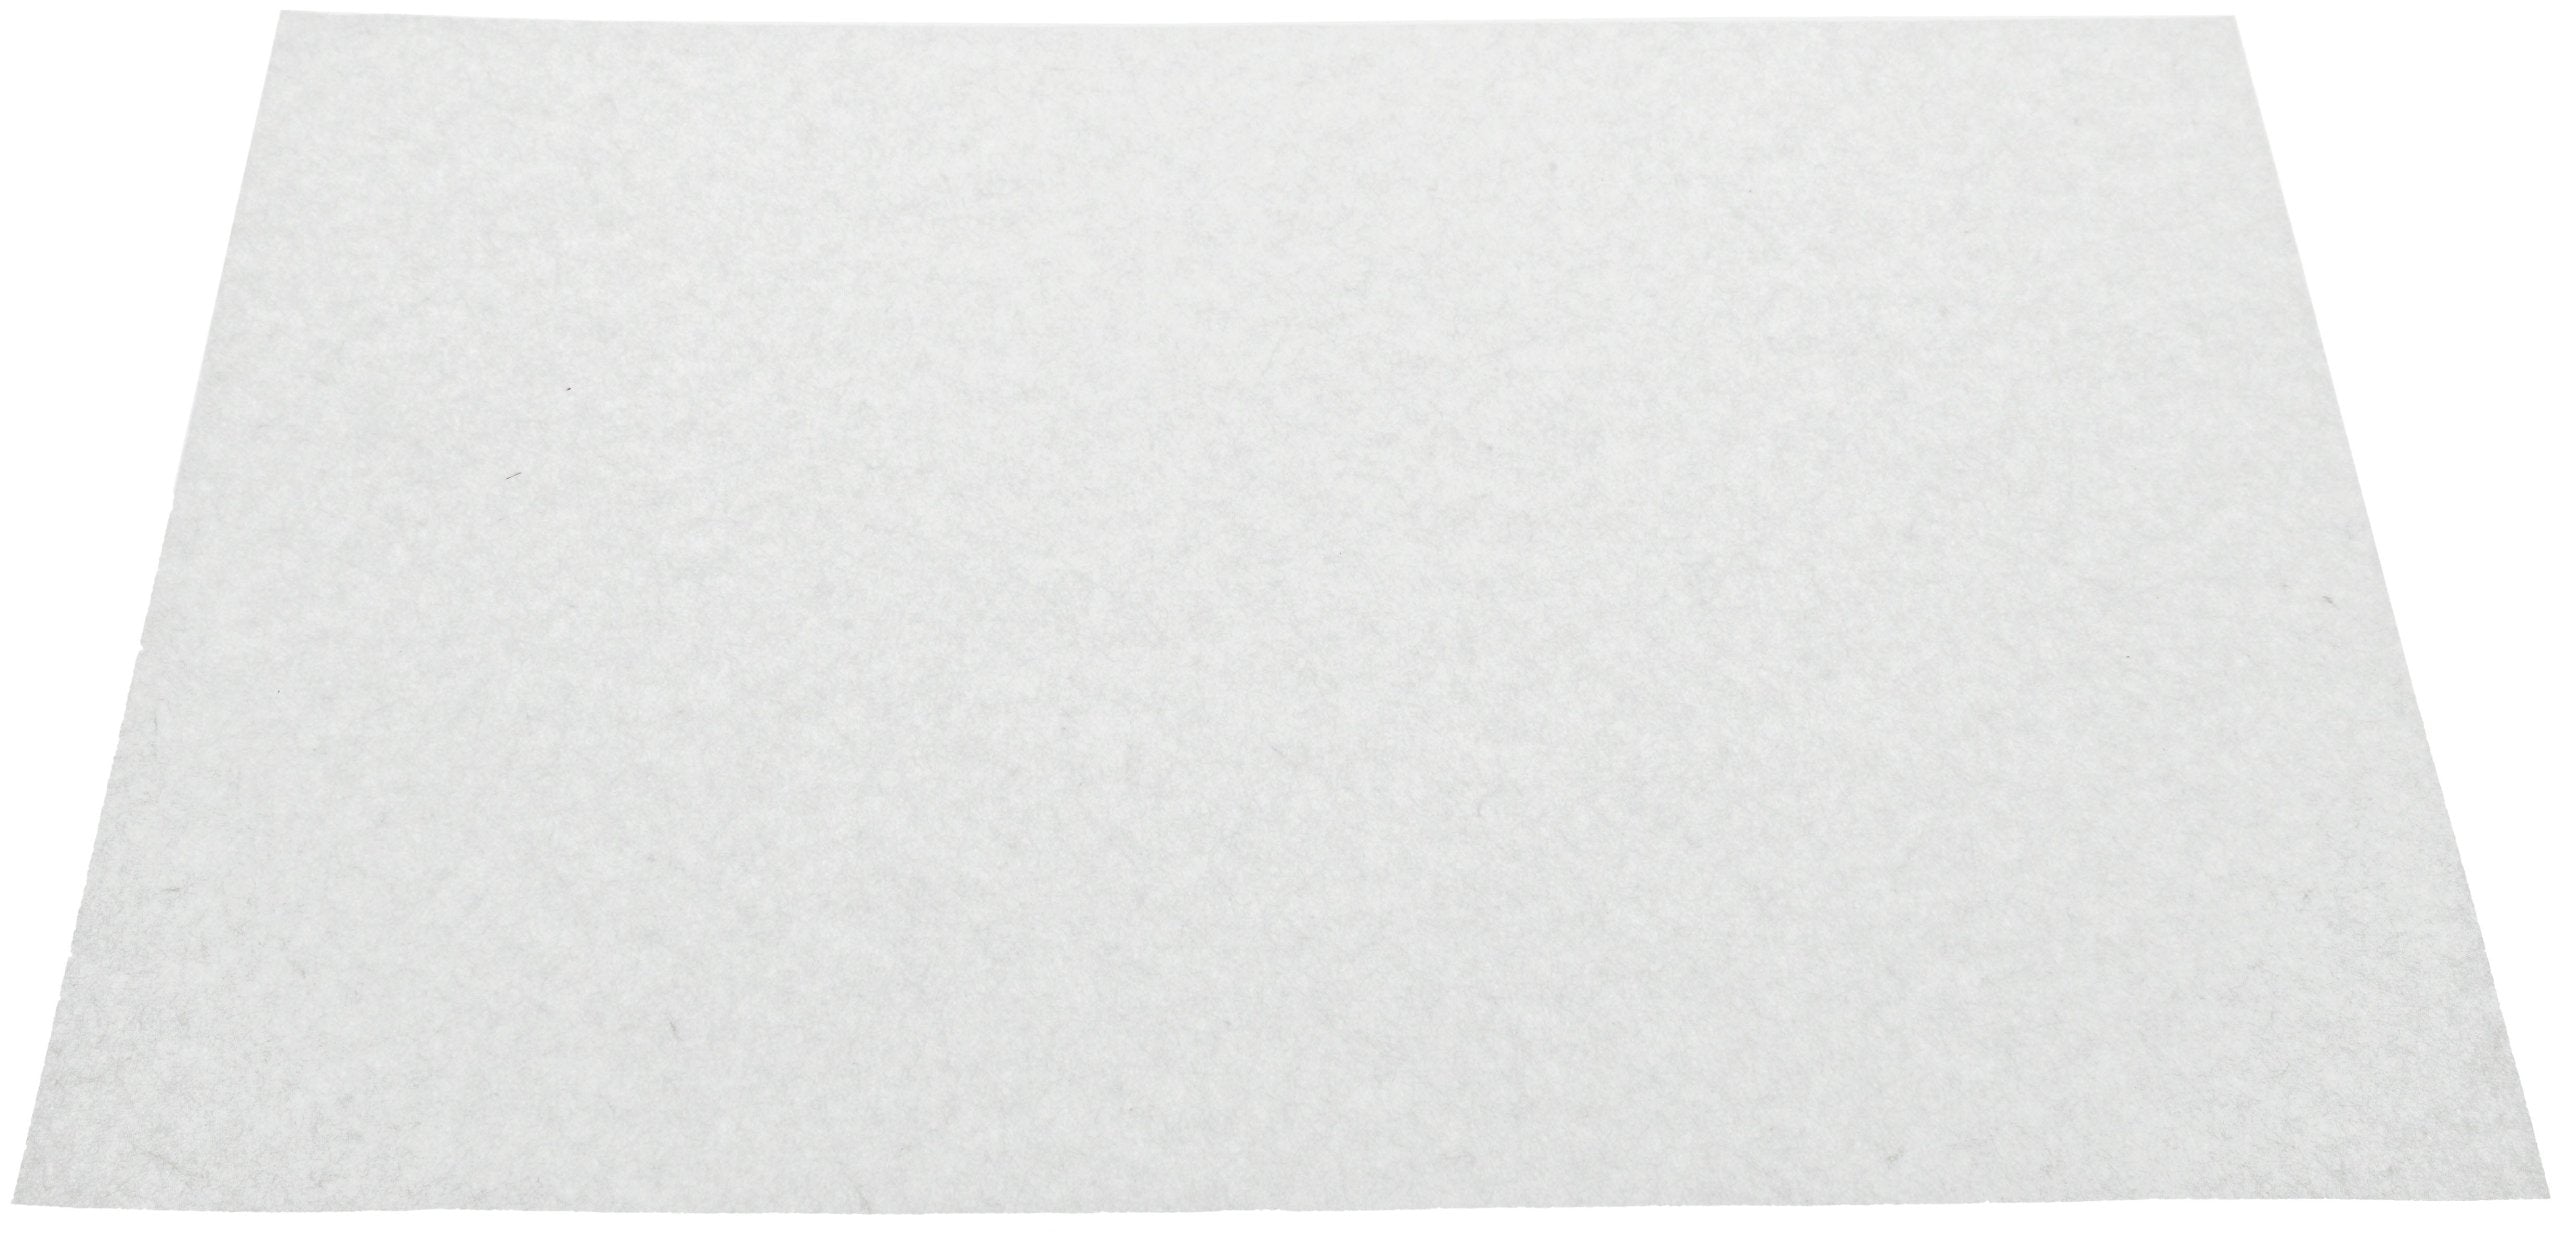 Whatman 10426994 Blotting Paper, Pure Cellulose, Grade GB005 Sheets, 58 x 58cm, 25/pk